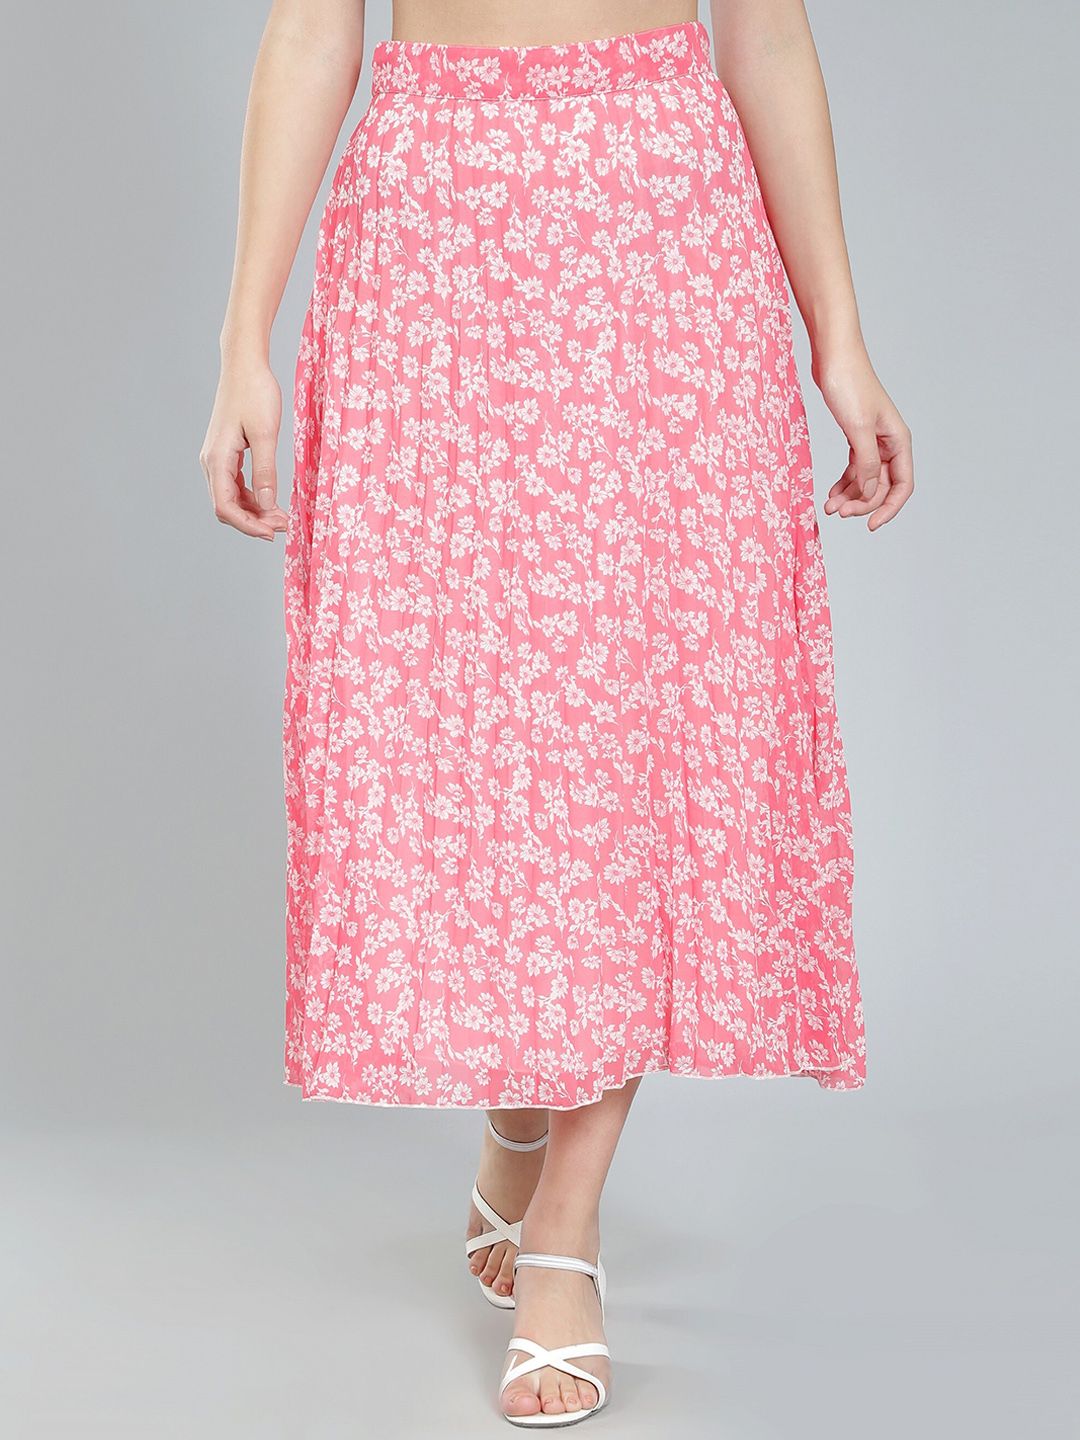 NUEVOSDAMAS Floral Printed Georgette Midi Flared Skirt Price in India